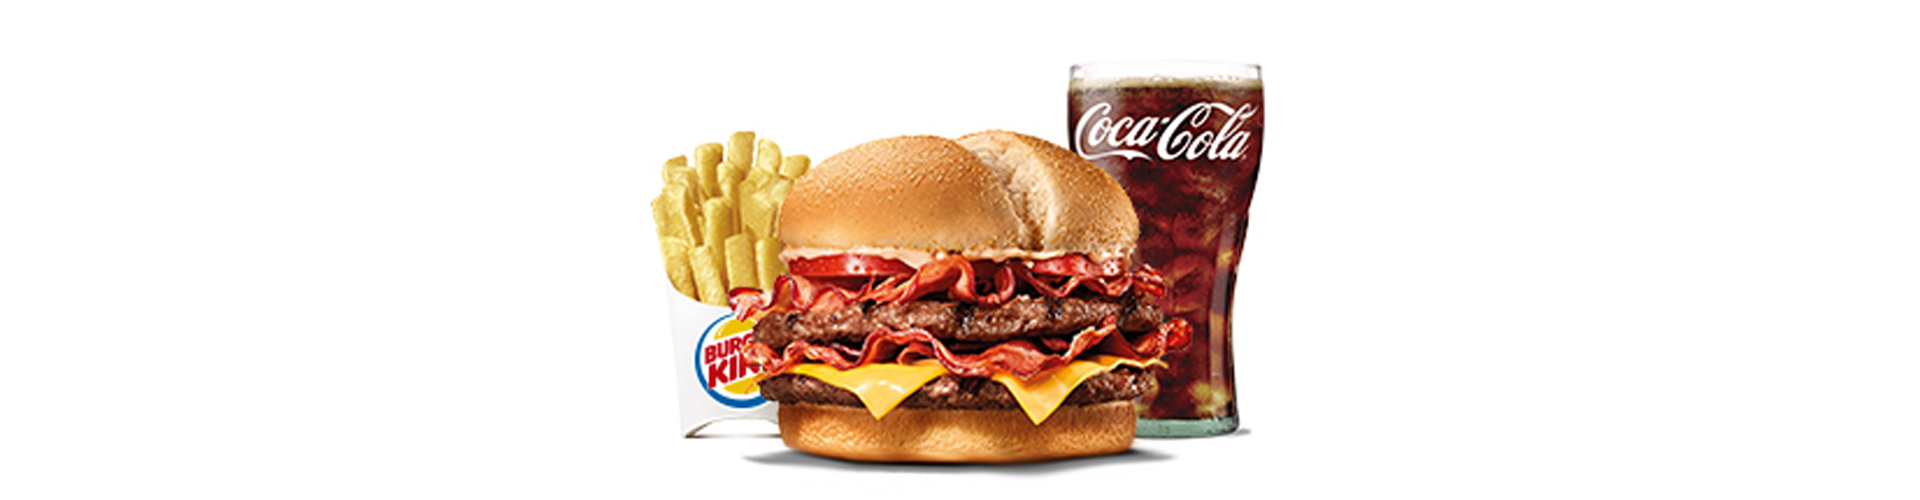 burgerking-40002212-sprite-ensalada